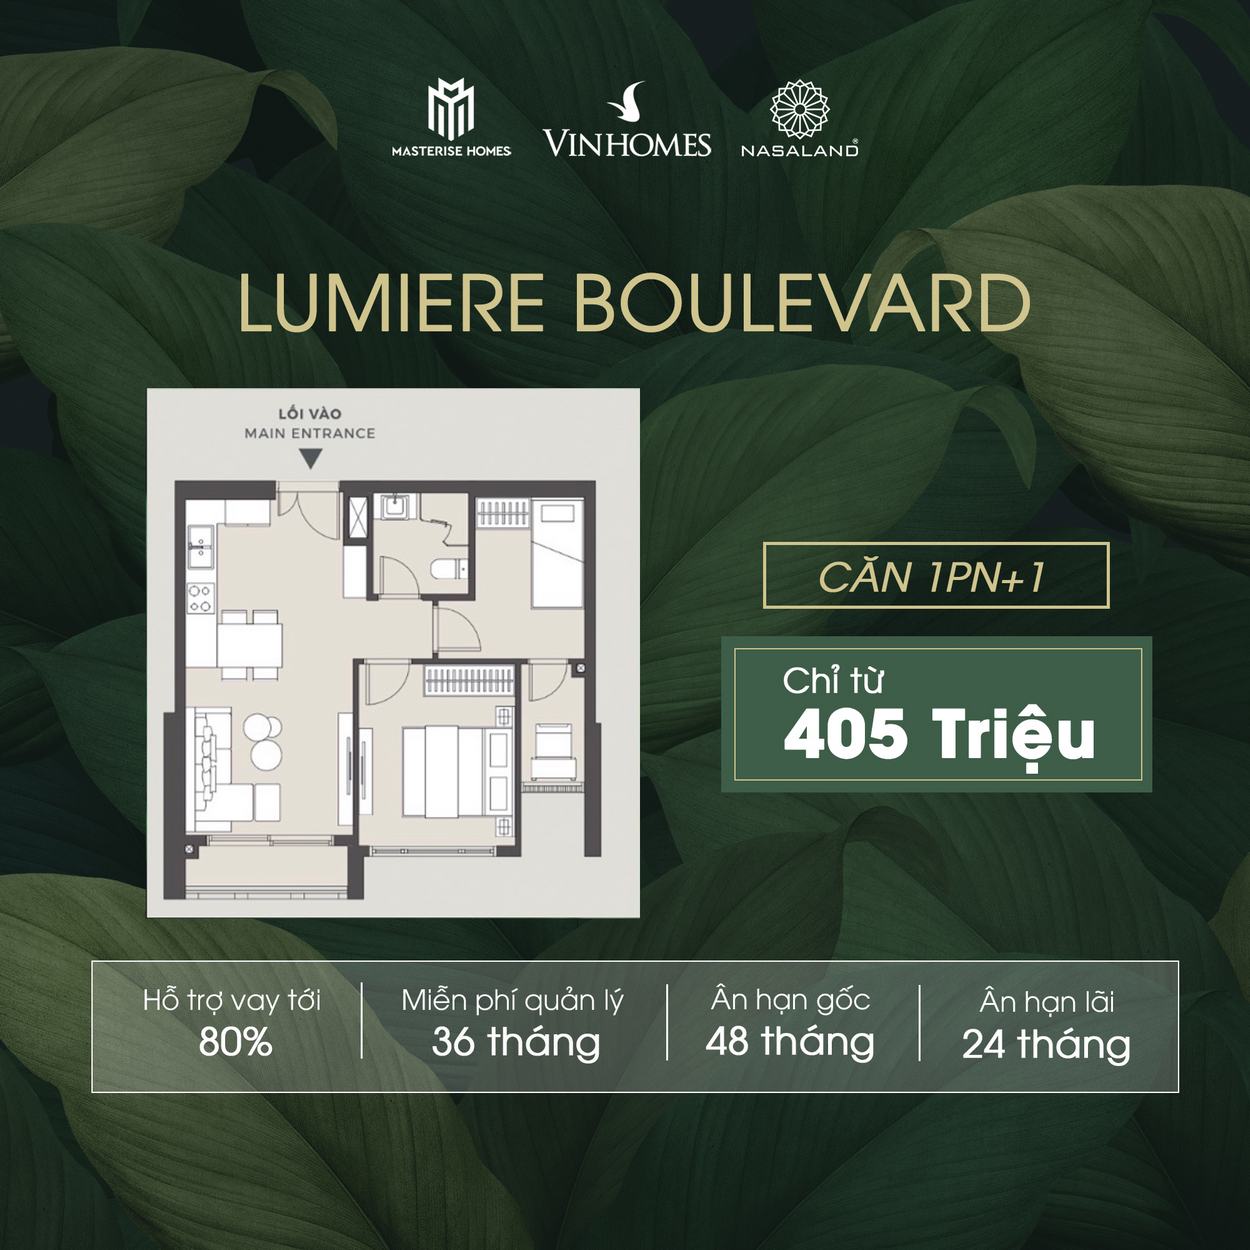 Giá bán Lumiere Boulevard - Căn hộ 1PN+1